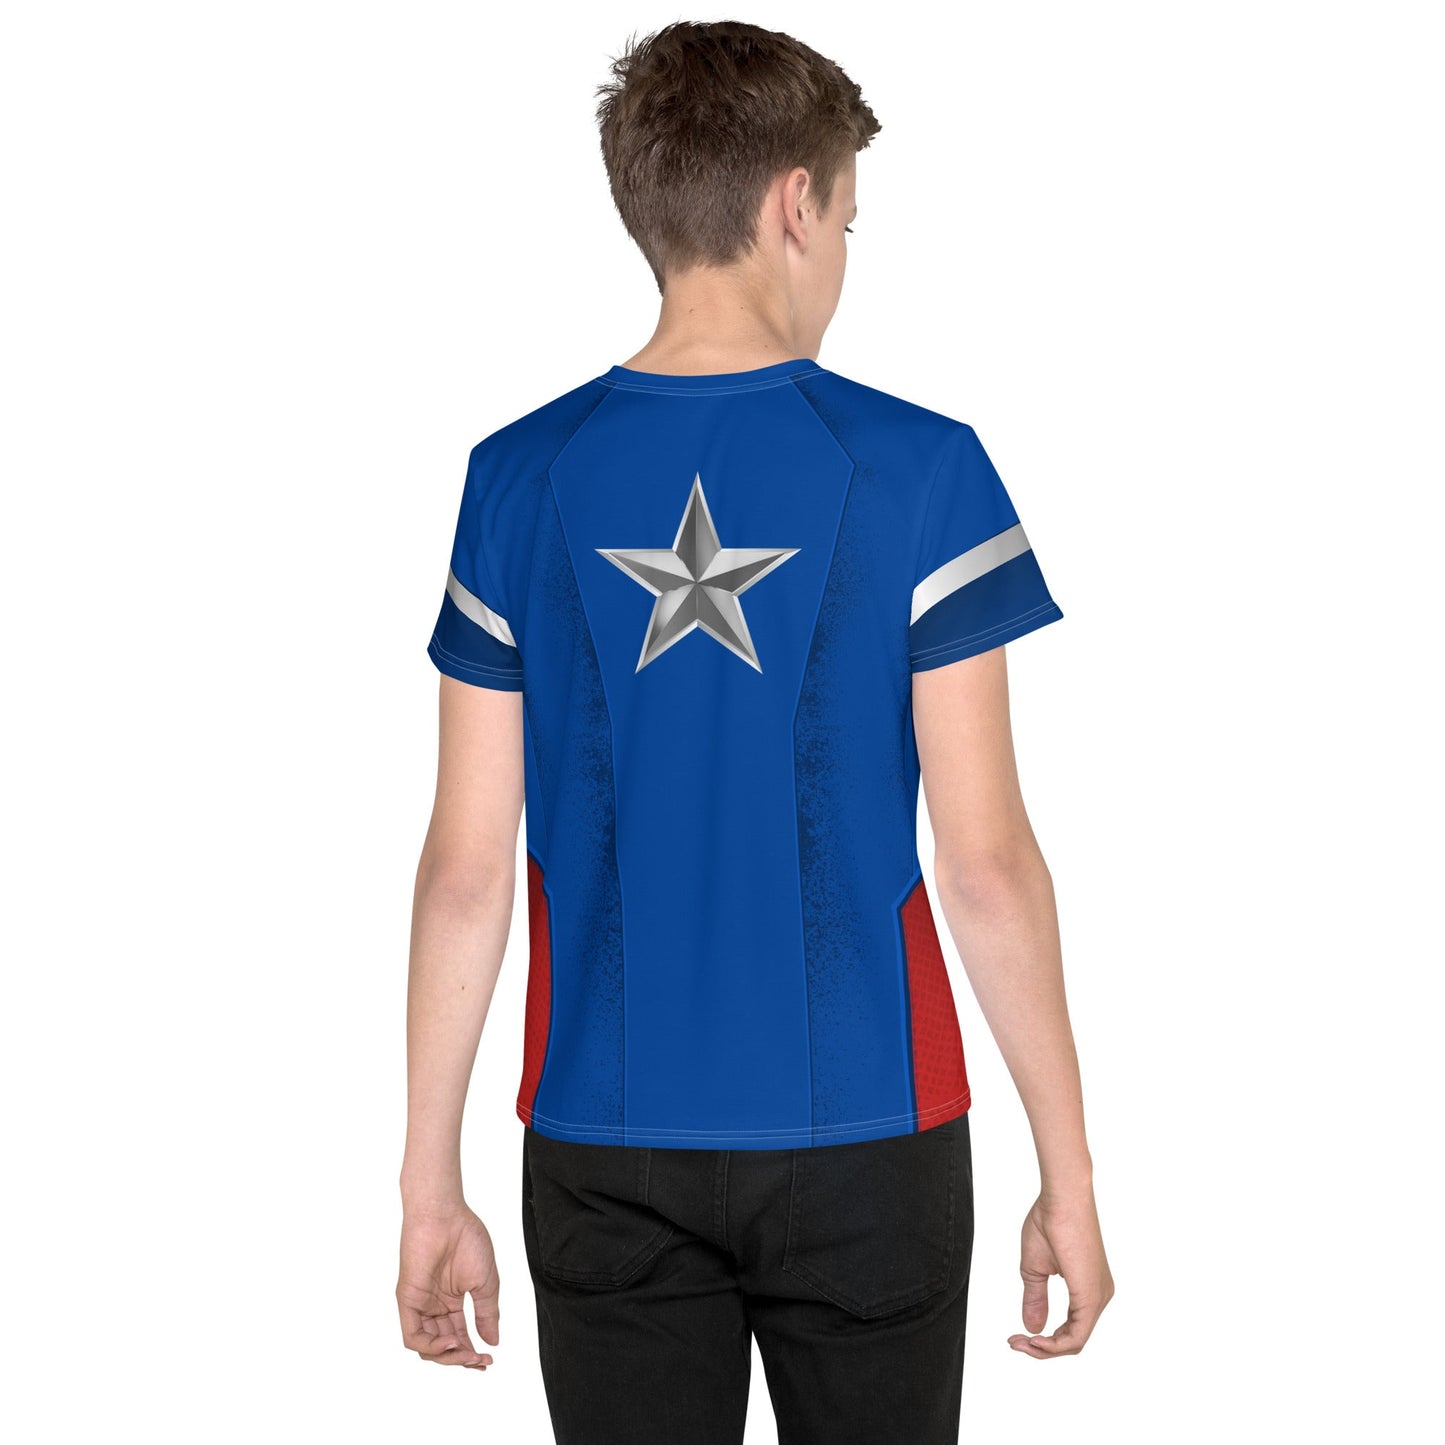 The Captain Youth crew neck t-shirt avengerscalifornia adventurecaptain america#tag4##tag5##tag6#